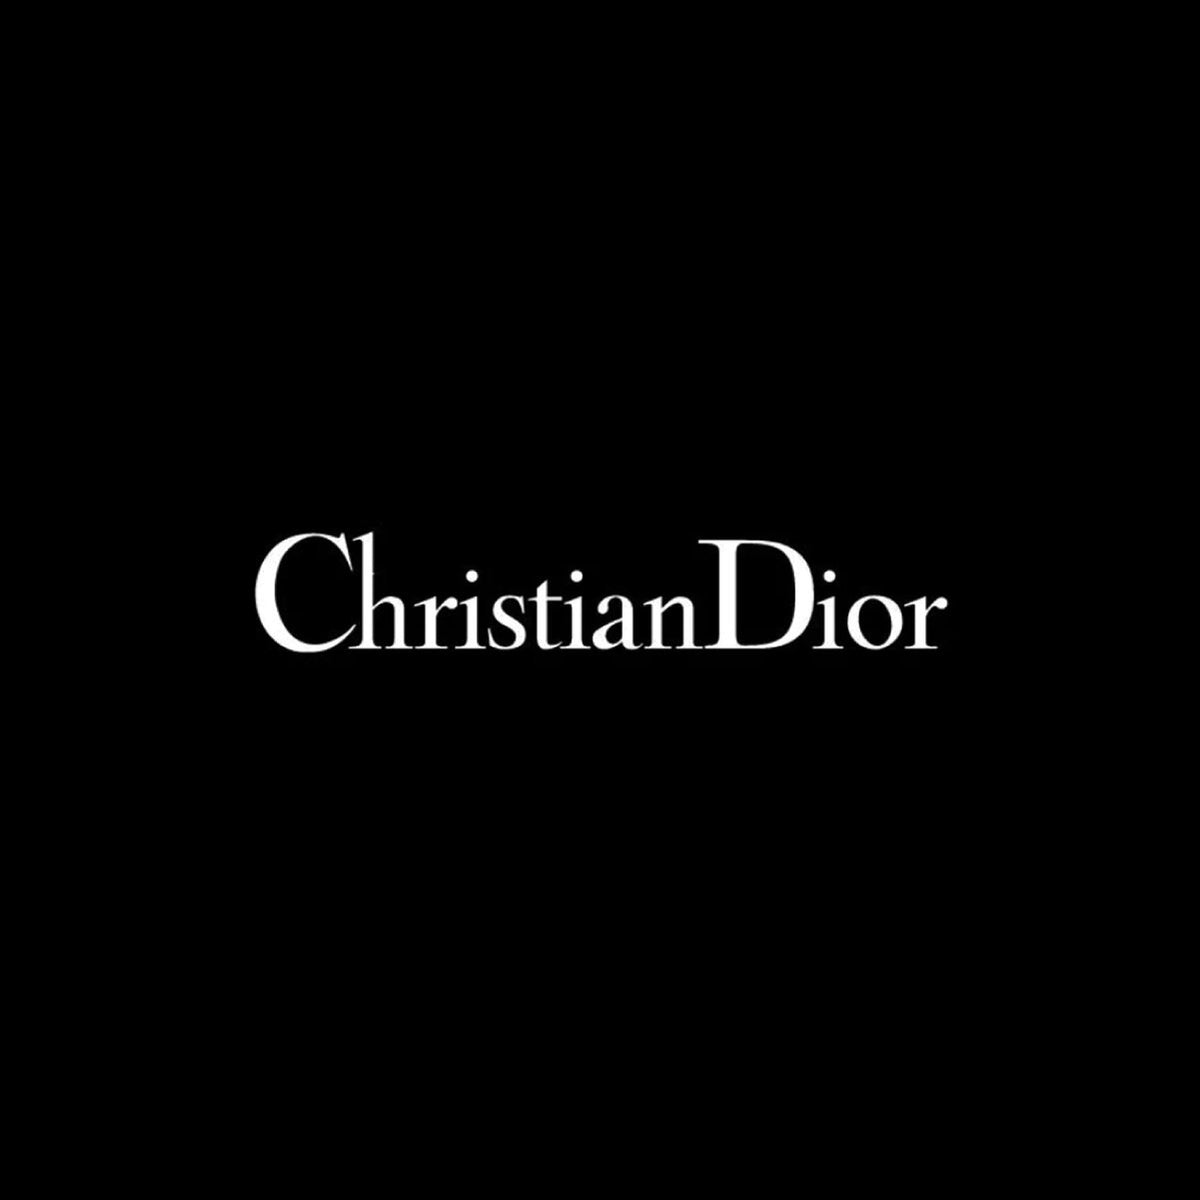 Christian Dior דיור